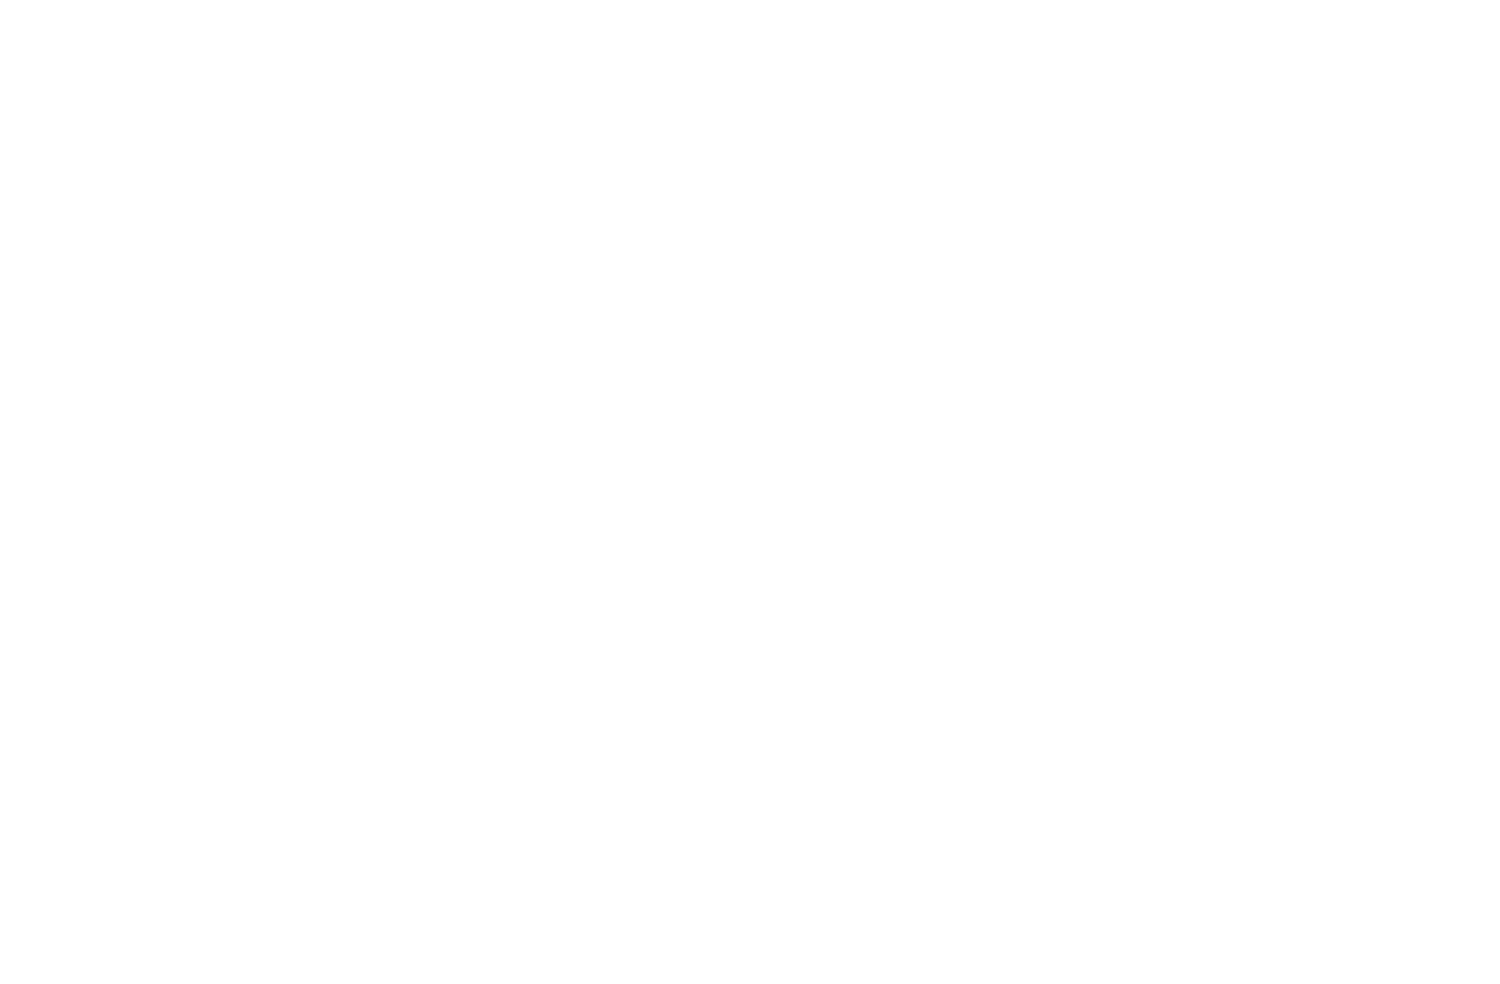 Chiet Productions